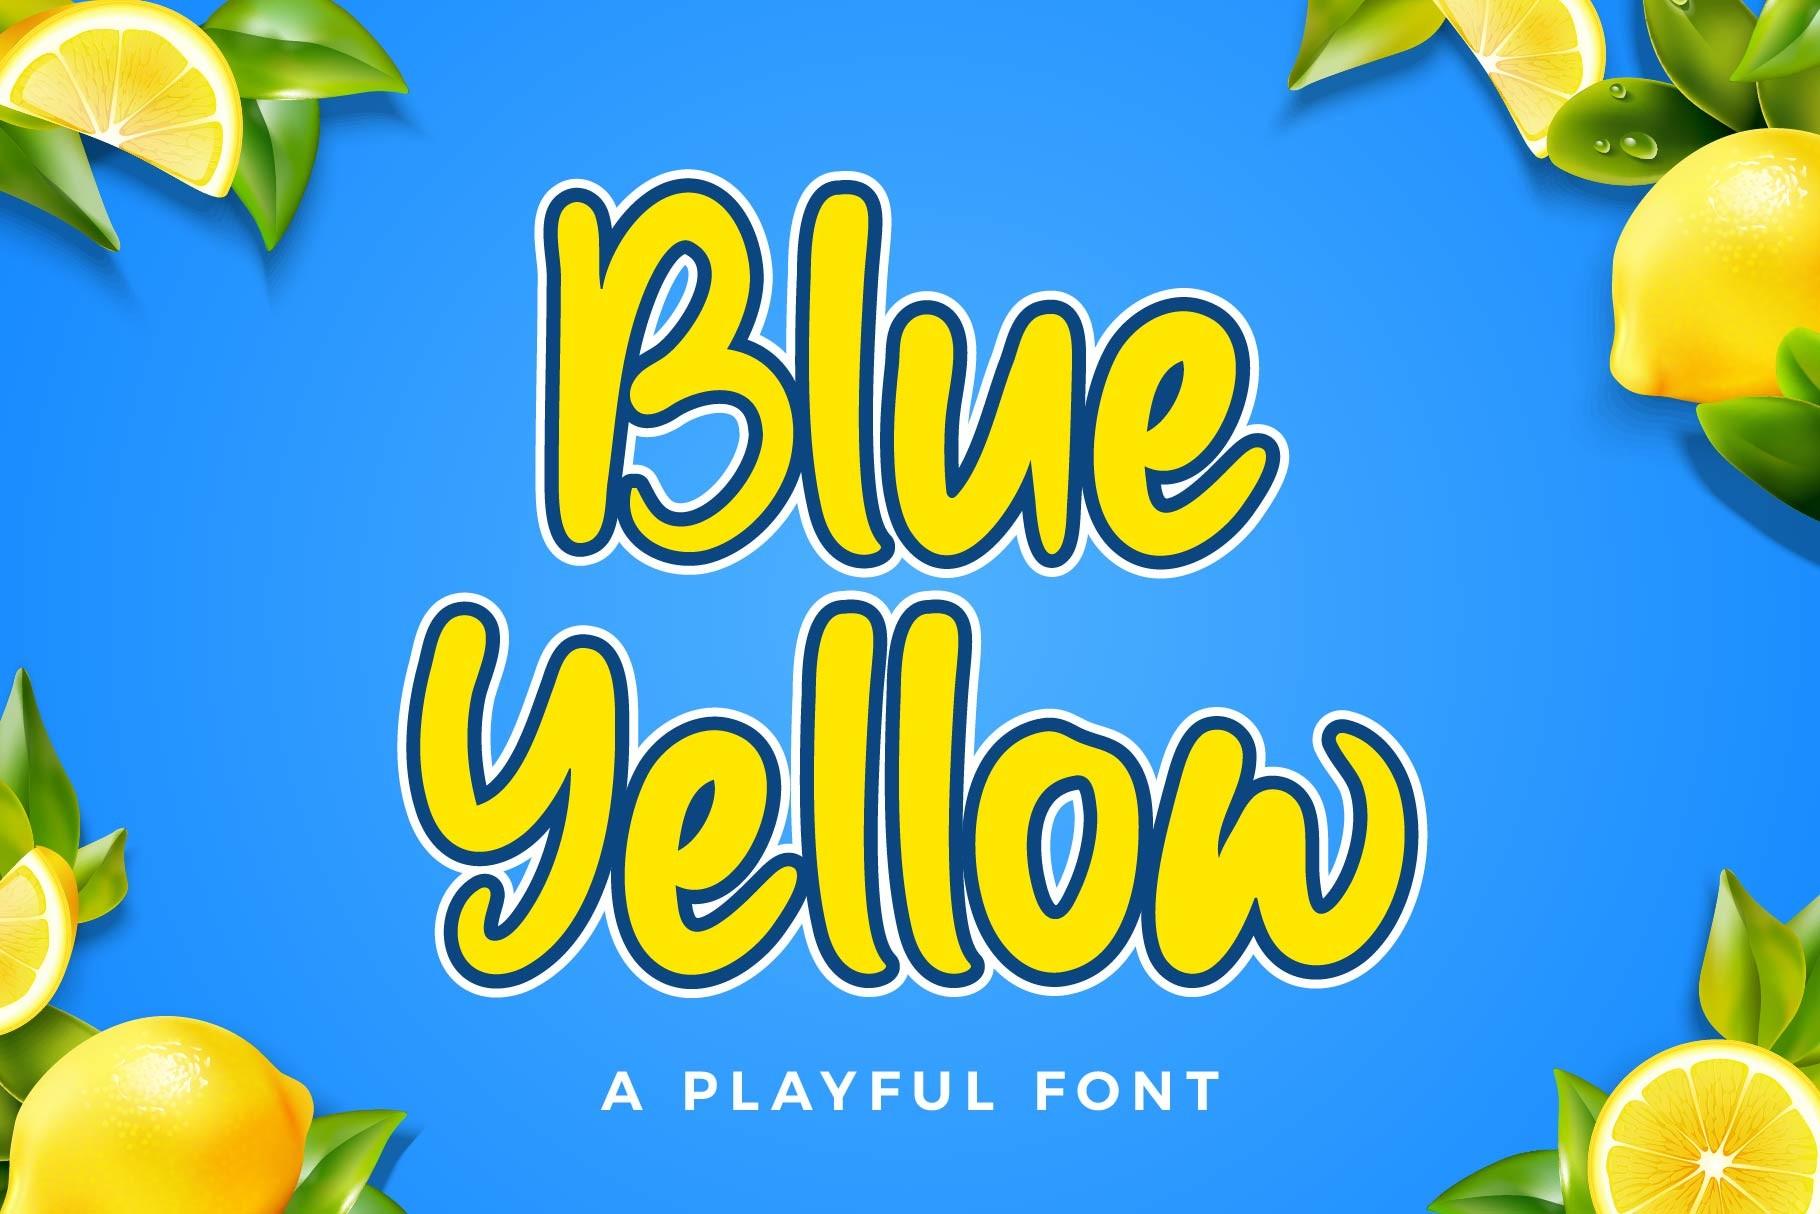 Blue Yellow Font